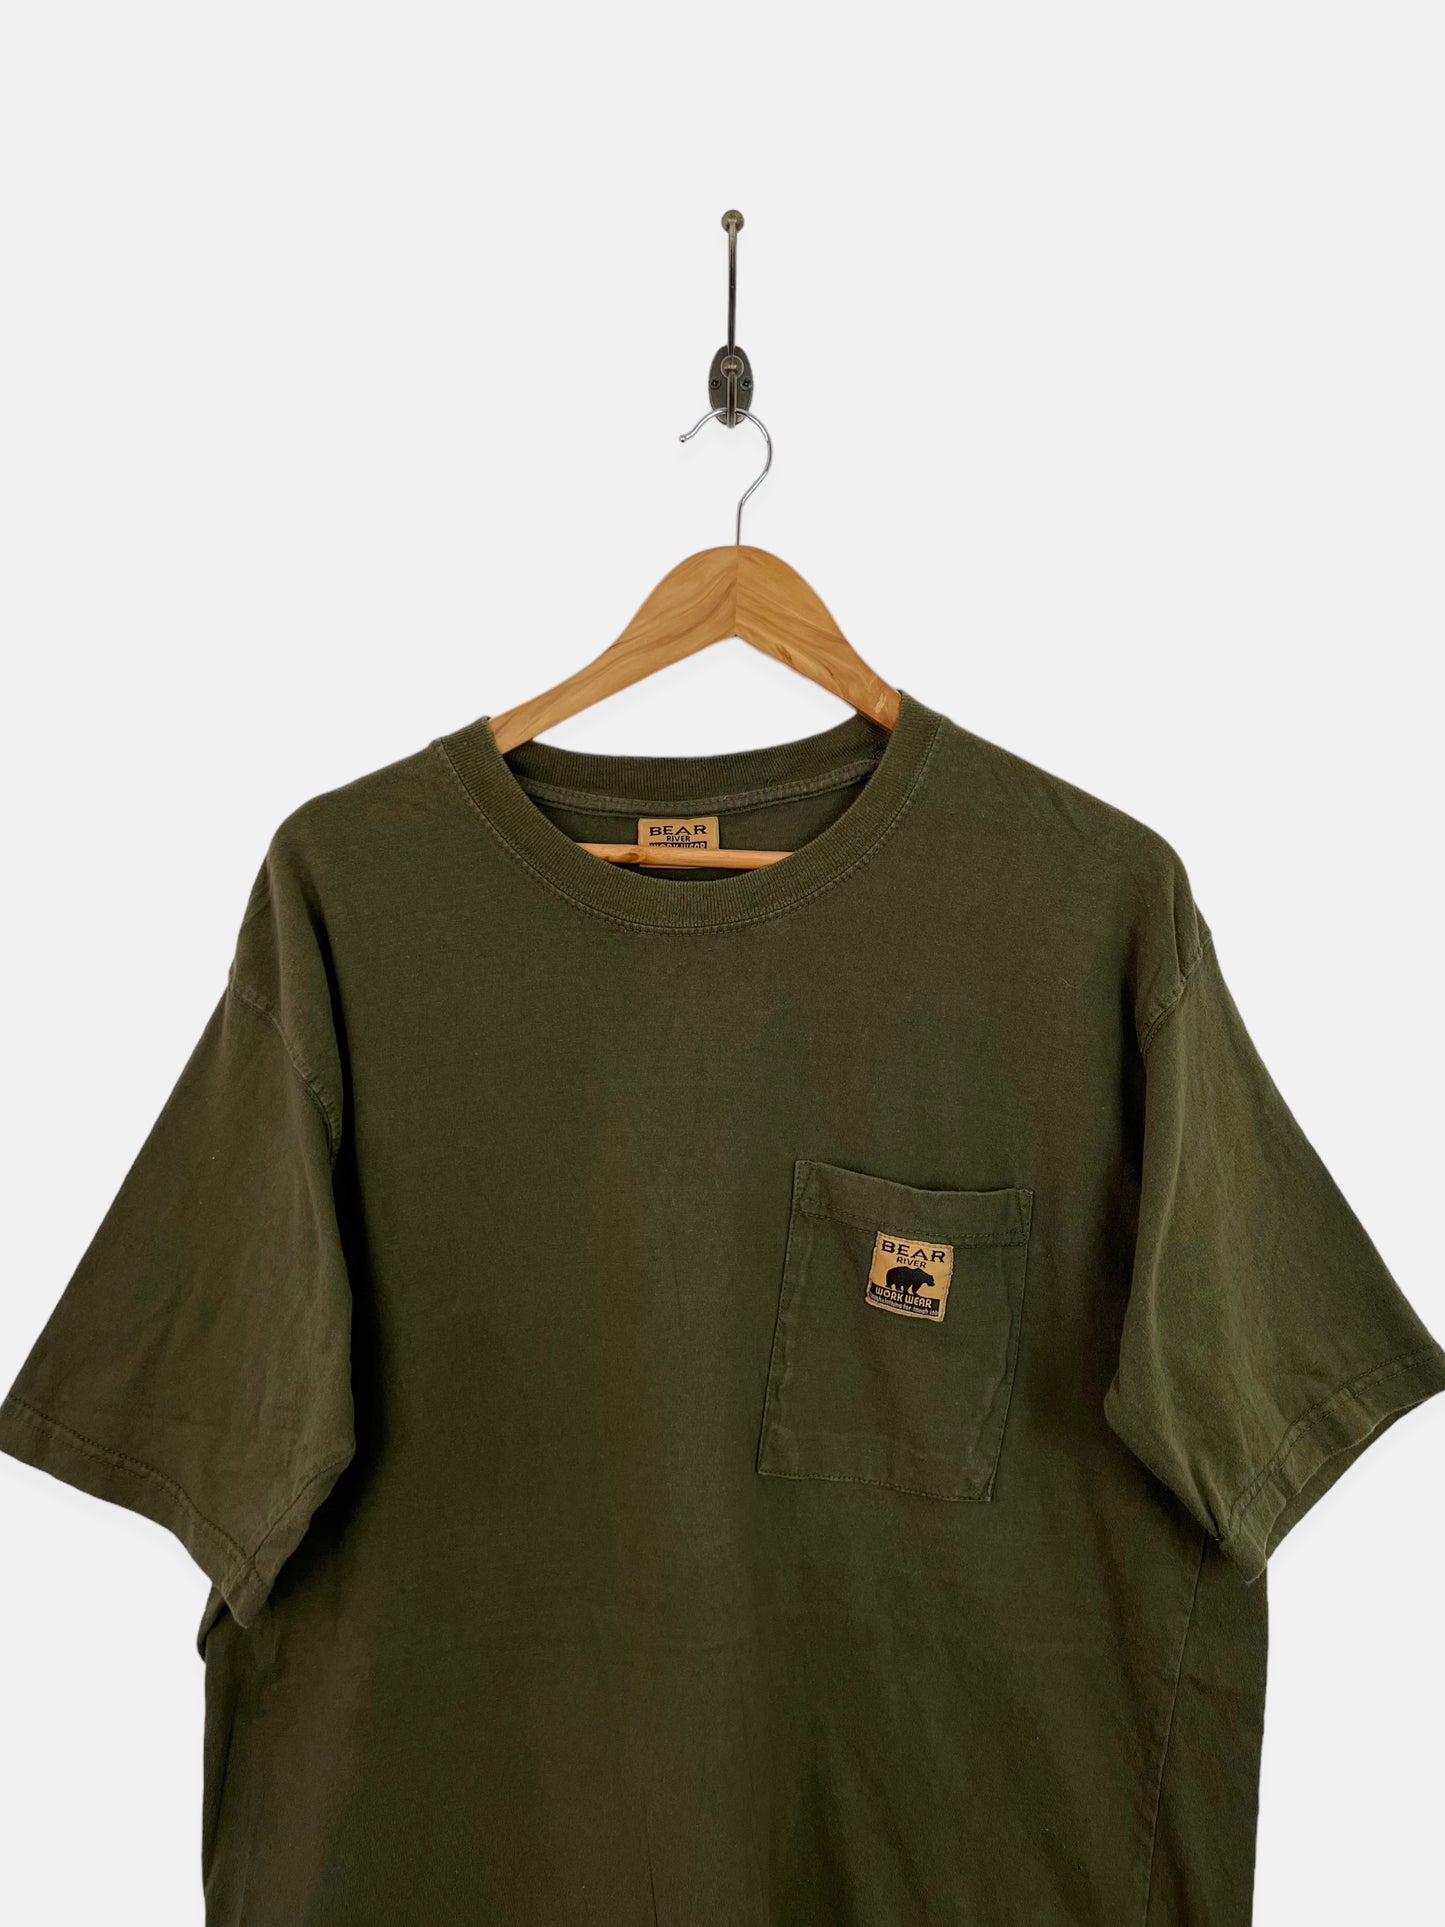 Bear River Work Wear Vintage T-Shirt Size XL